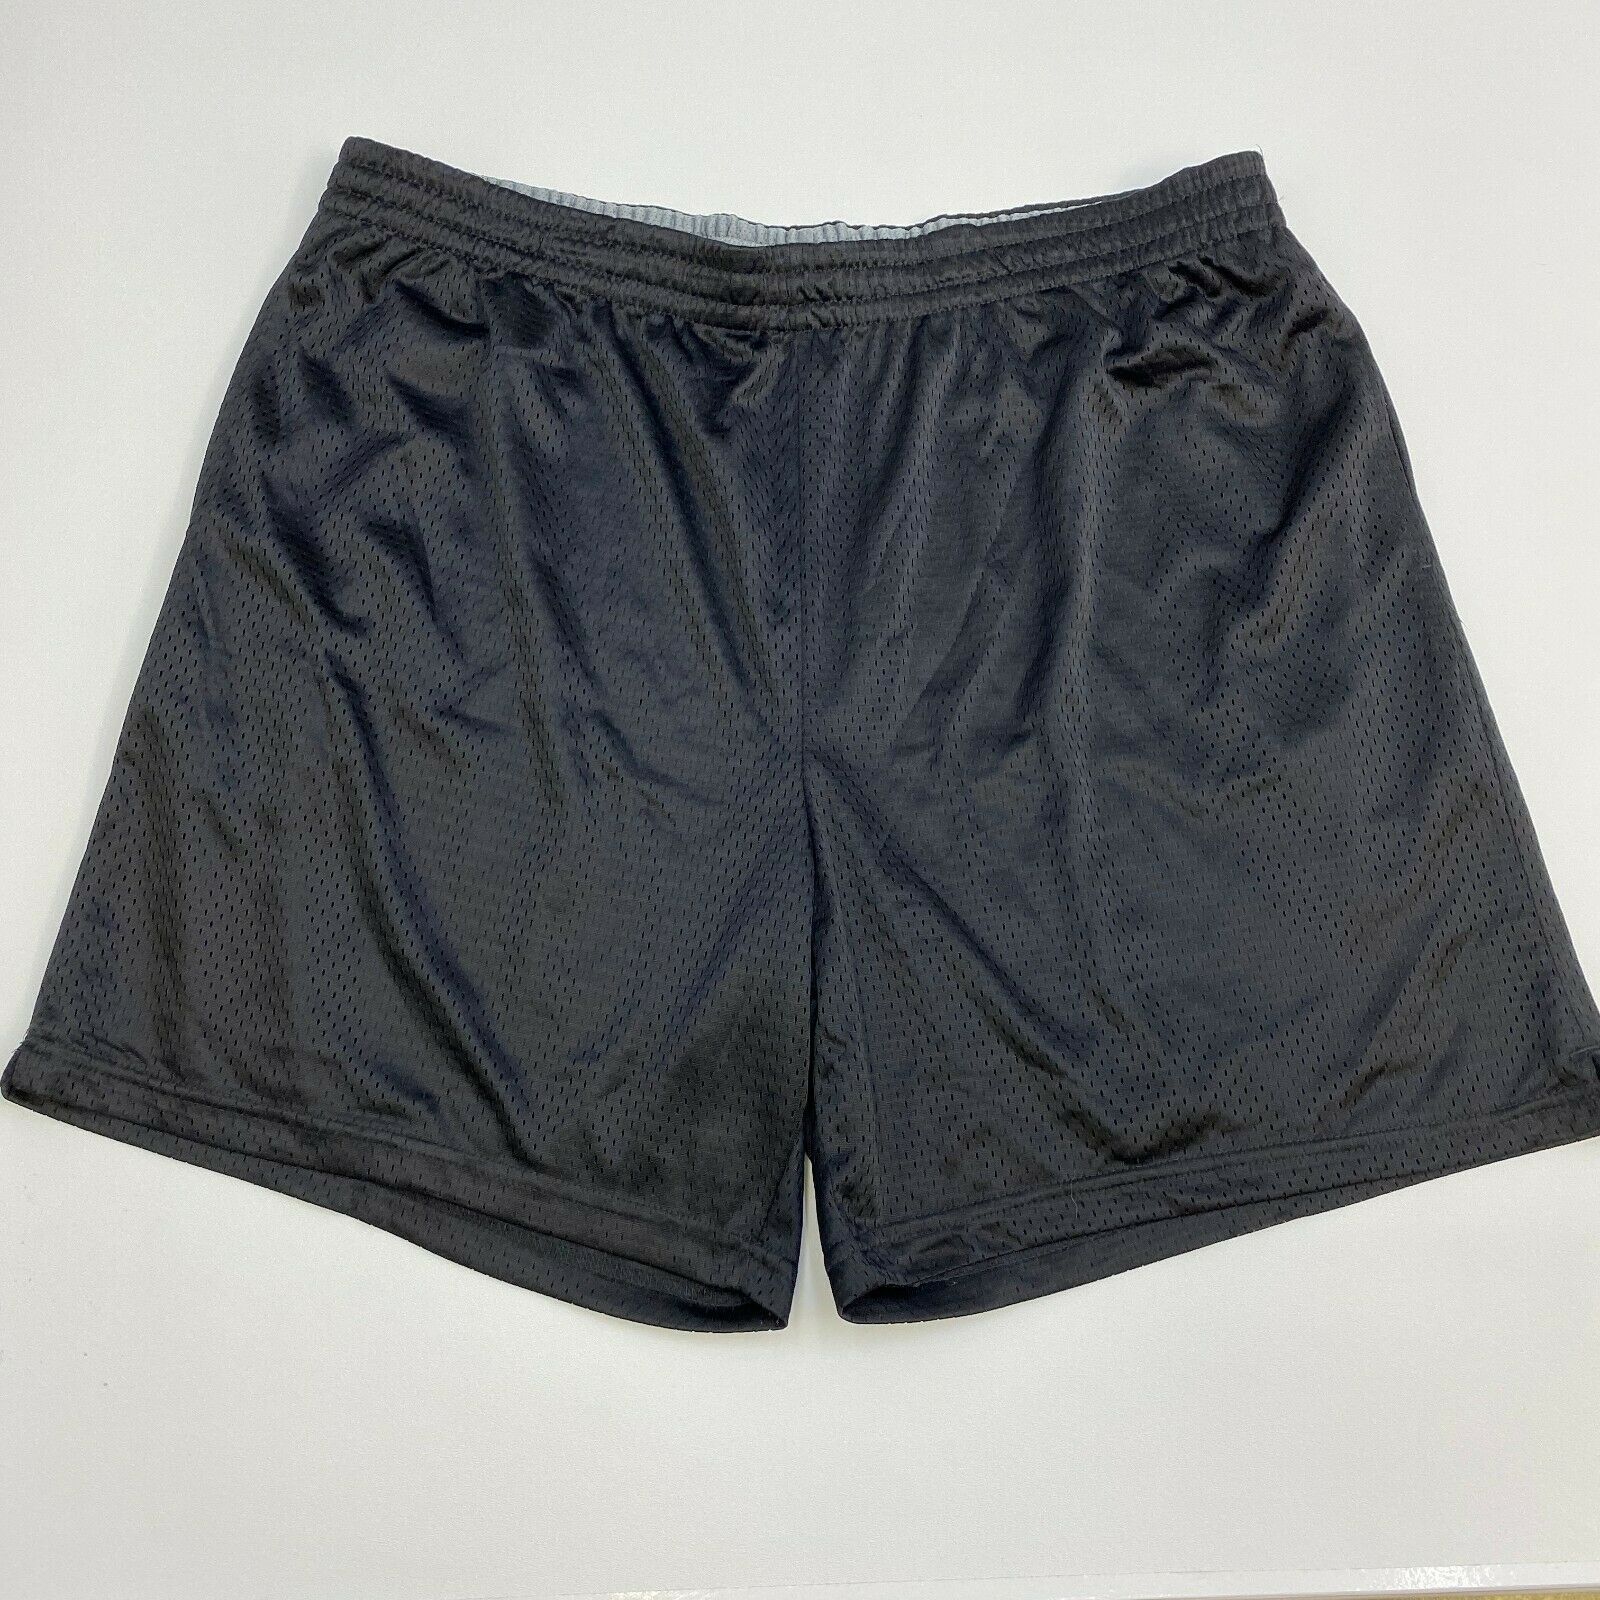 Starter Shorts Mens 2XL Black Polyester Casual Basketball - Shorts